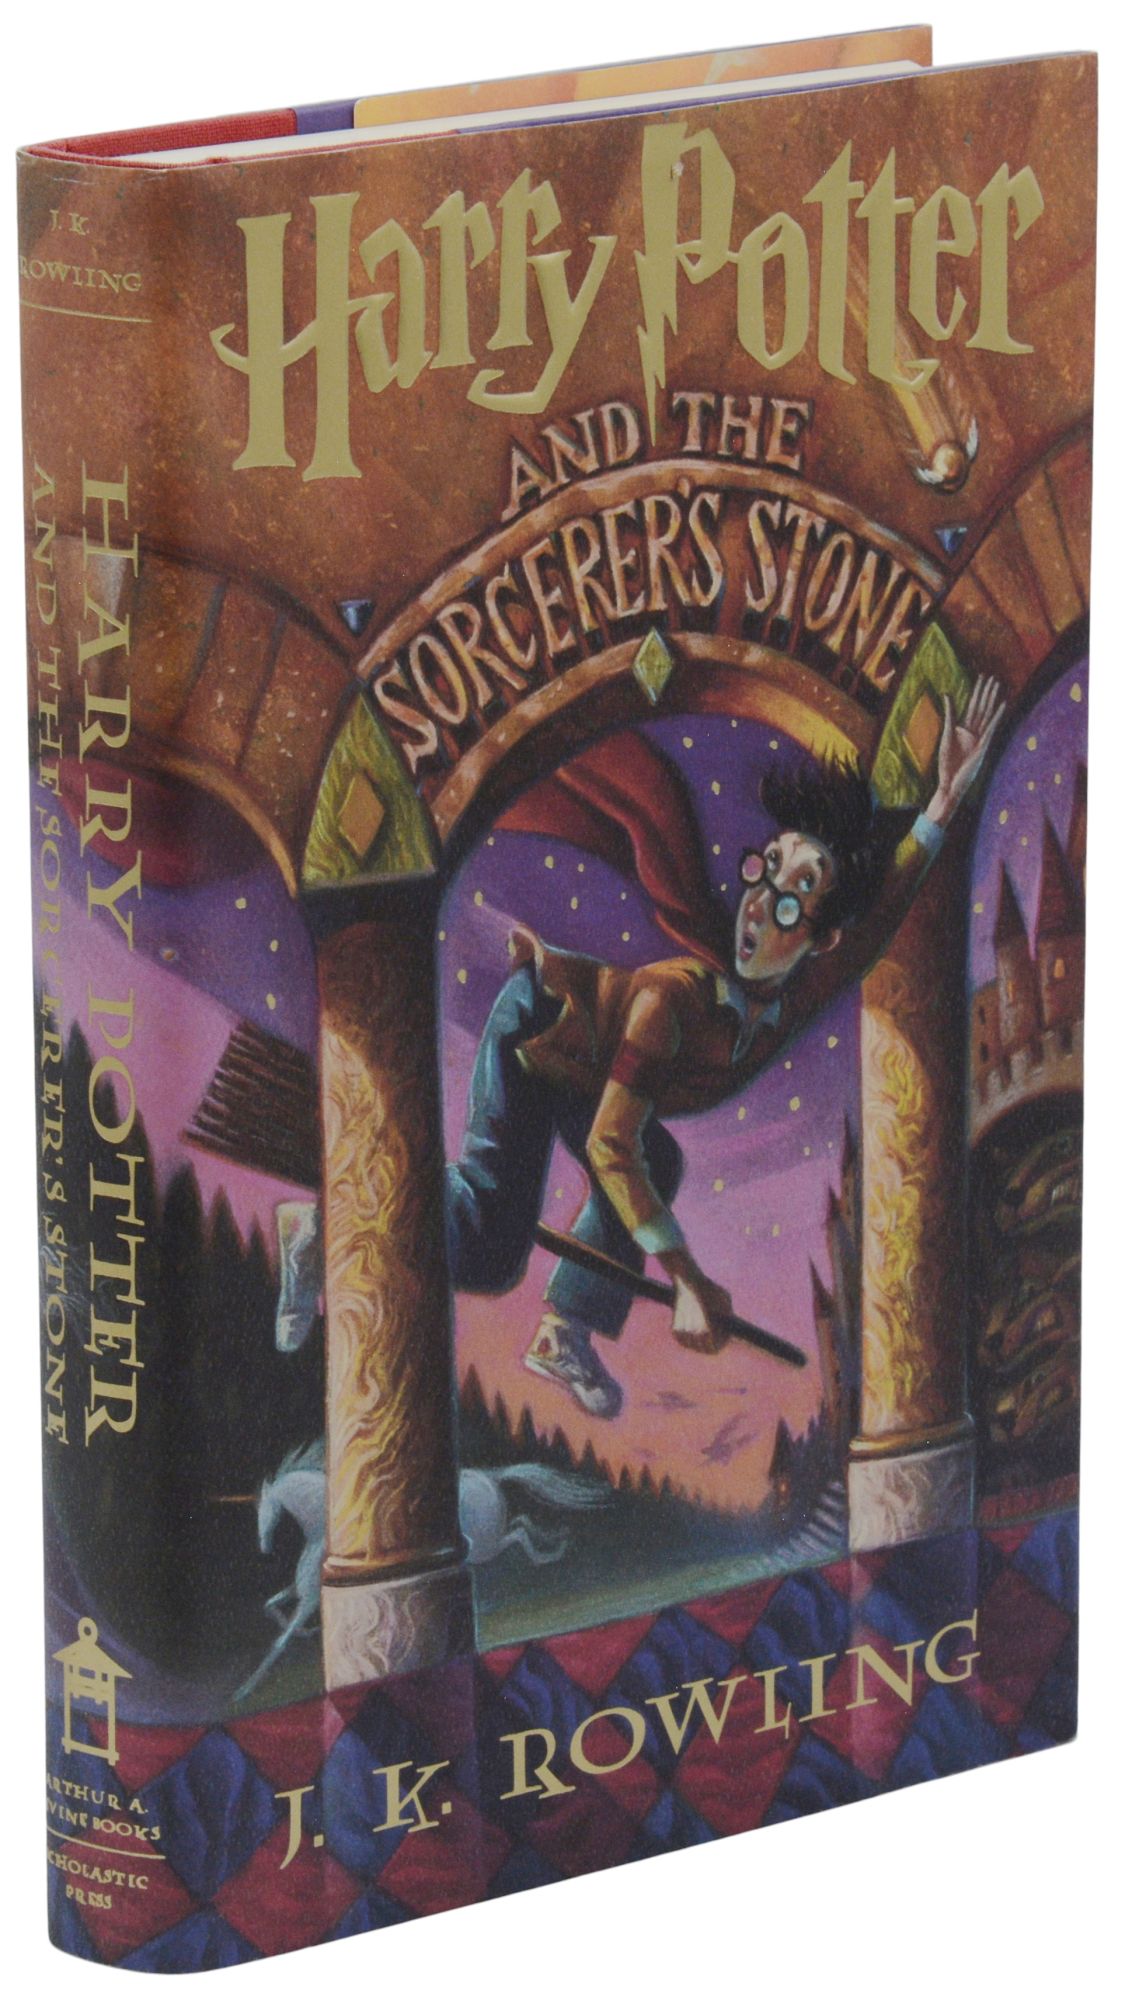 Scholastic Inc. The Official Harry Potter Cookbook - Linden Tree Books, Los  Altos, CA